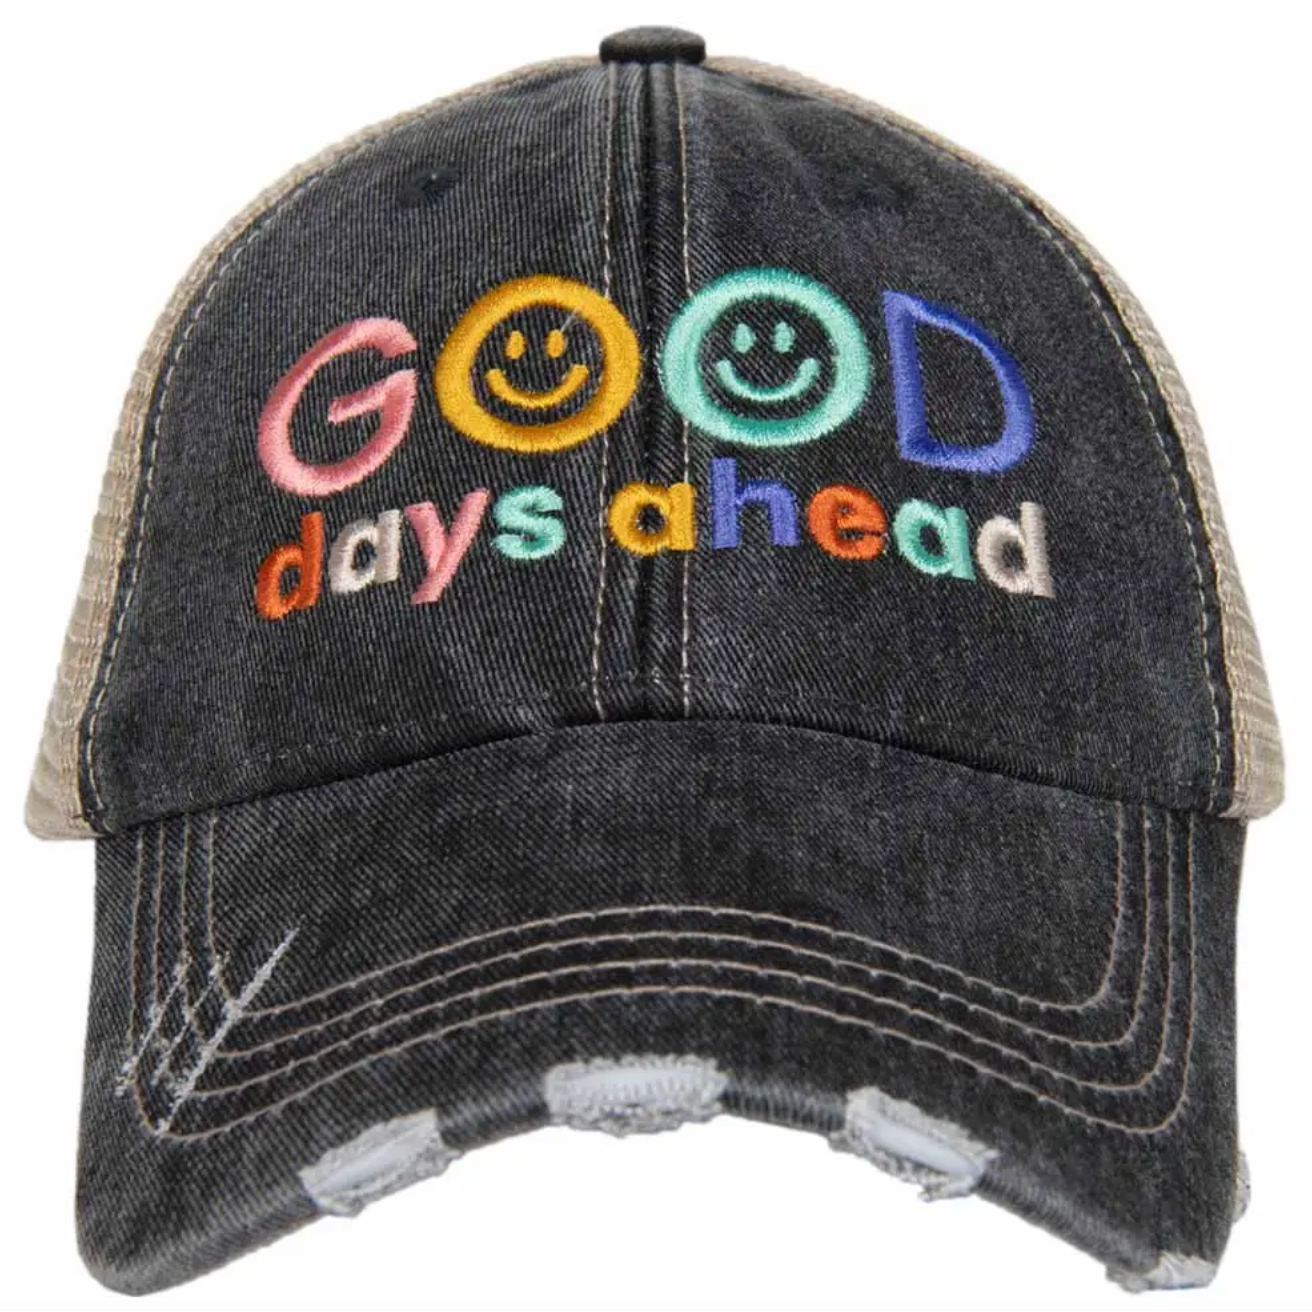 GOOD Days Ahead Trucker Hat by Katydid